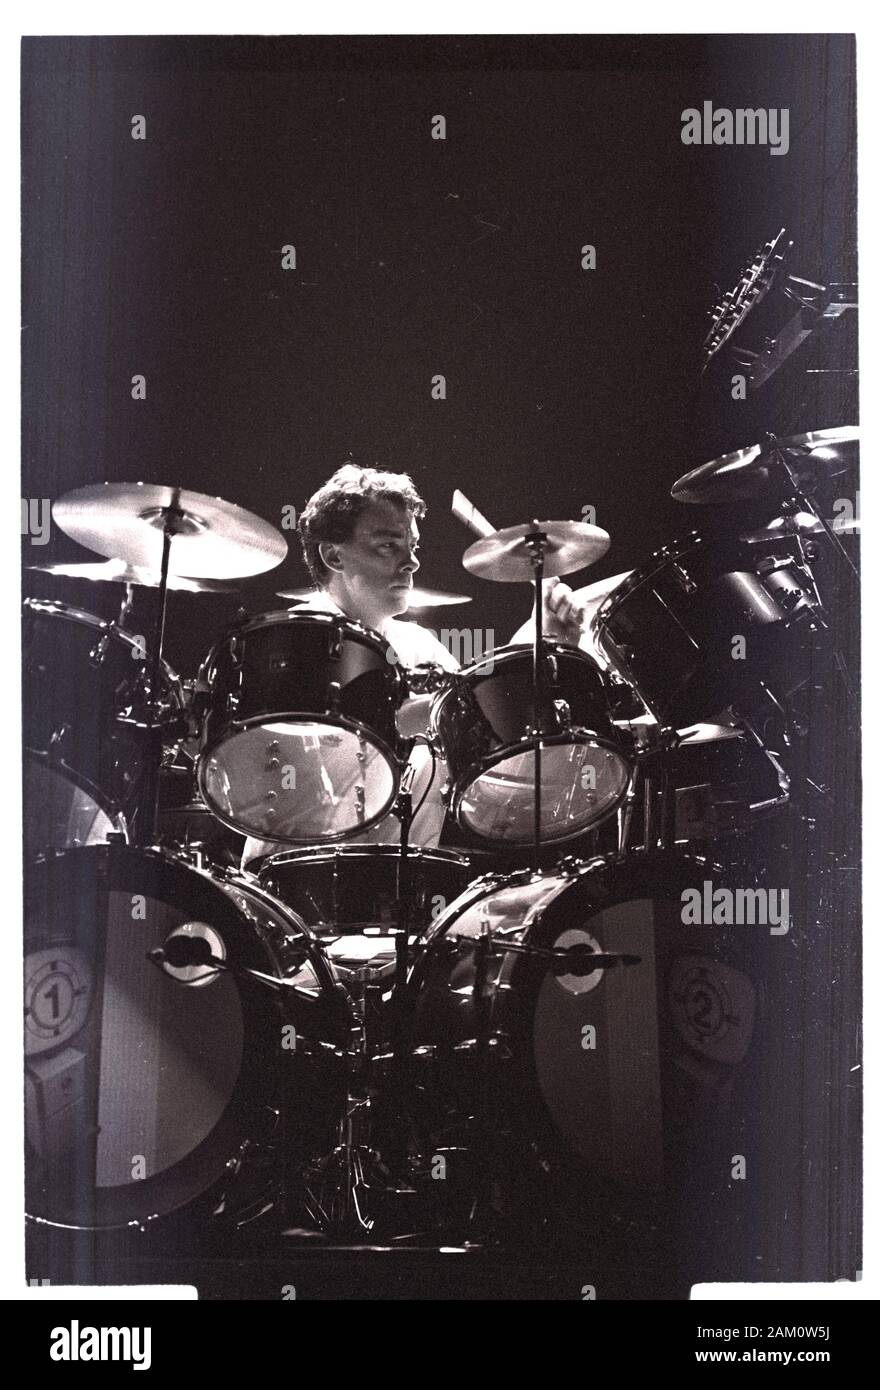 Rush 2112 Album Stock Photo - Alamy